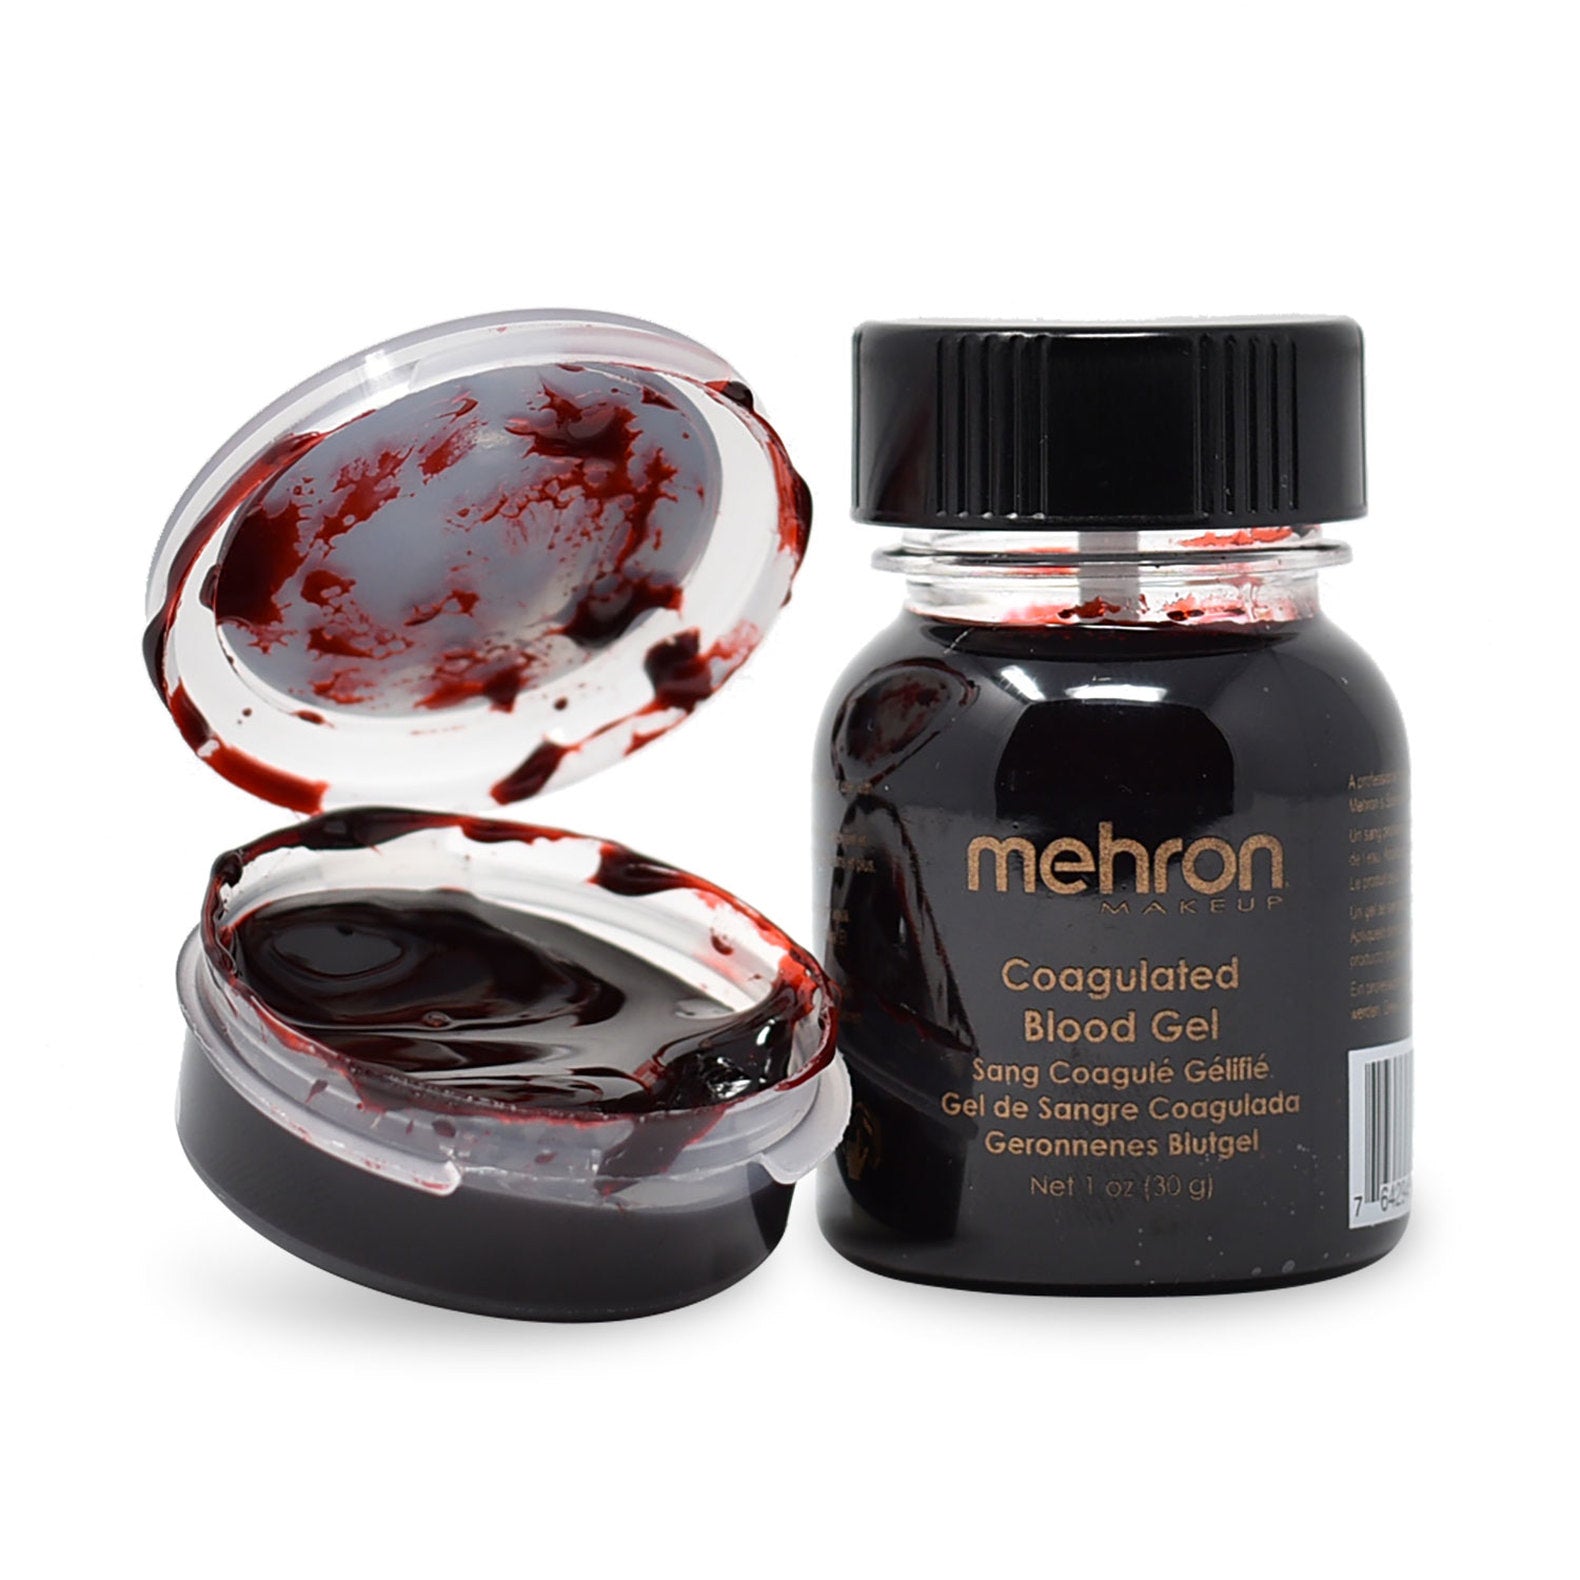 Coagulated blood gel MEHRON